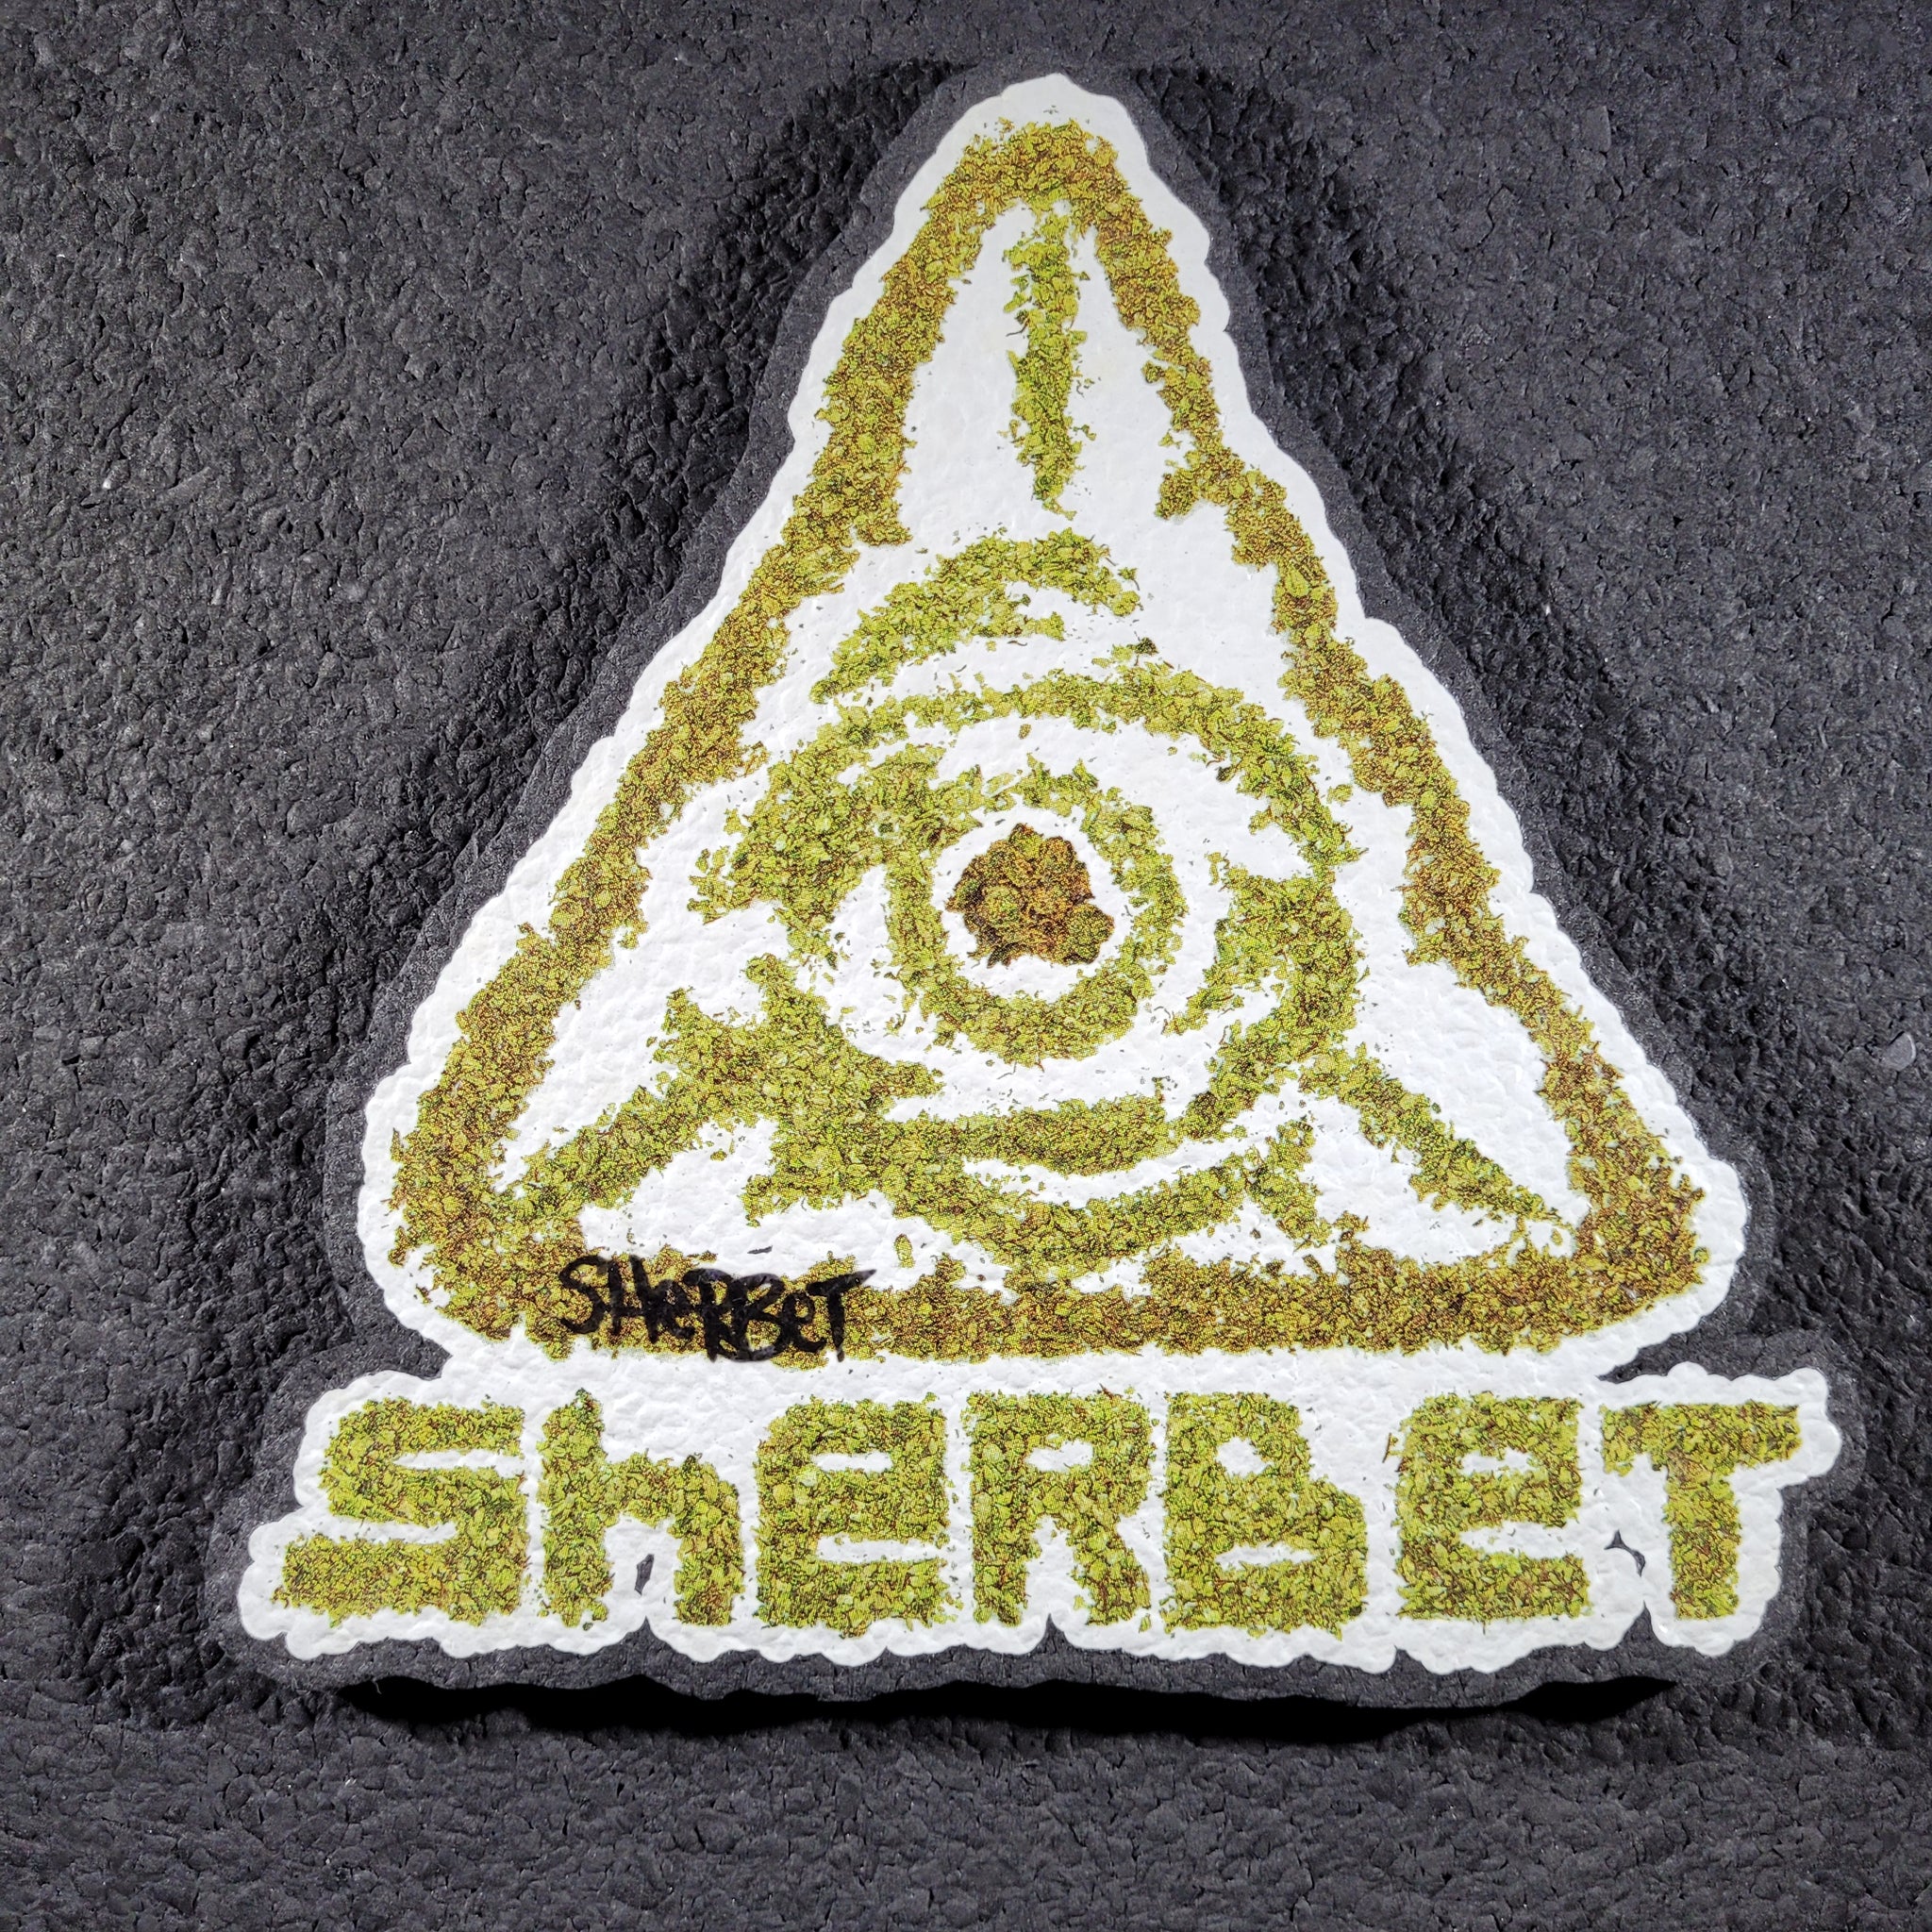 Sherbet Glass (Sighned) - Moodmats